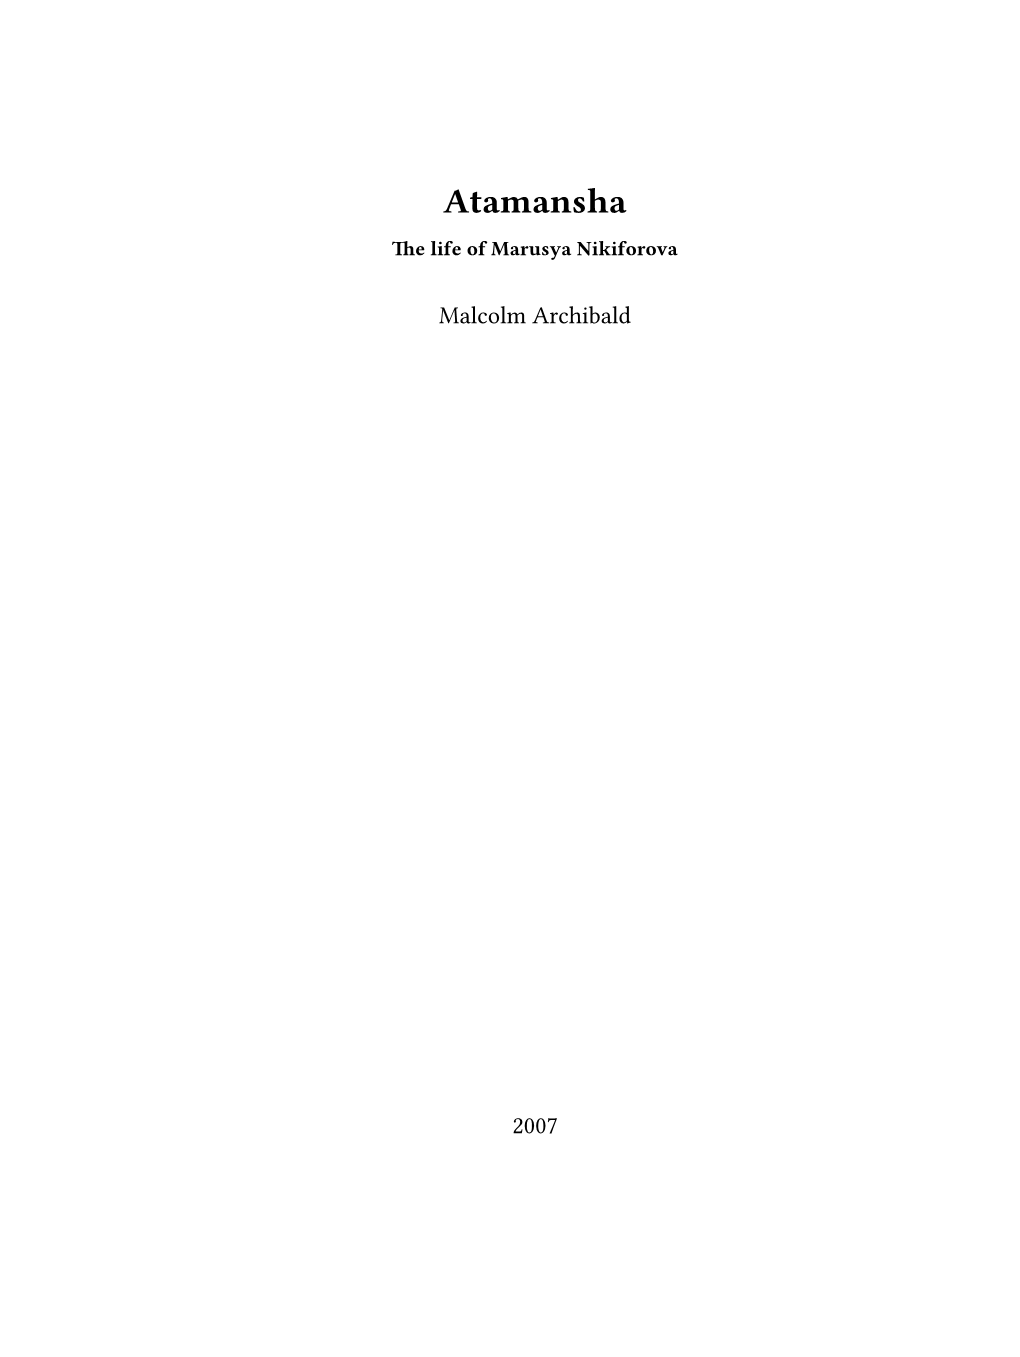 Atamansha the Life of Marusya Nikiforova